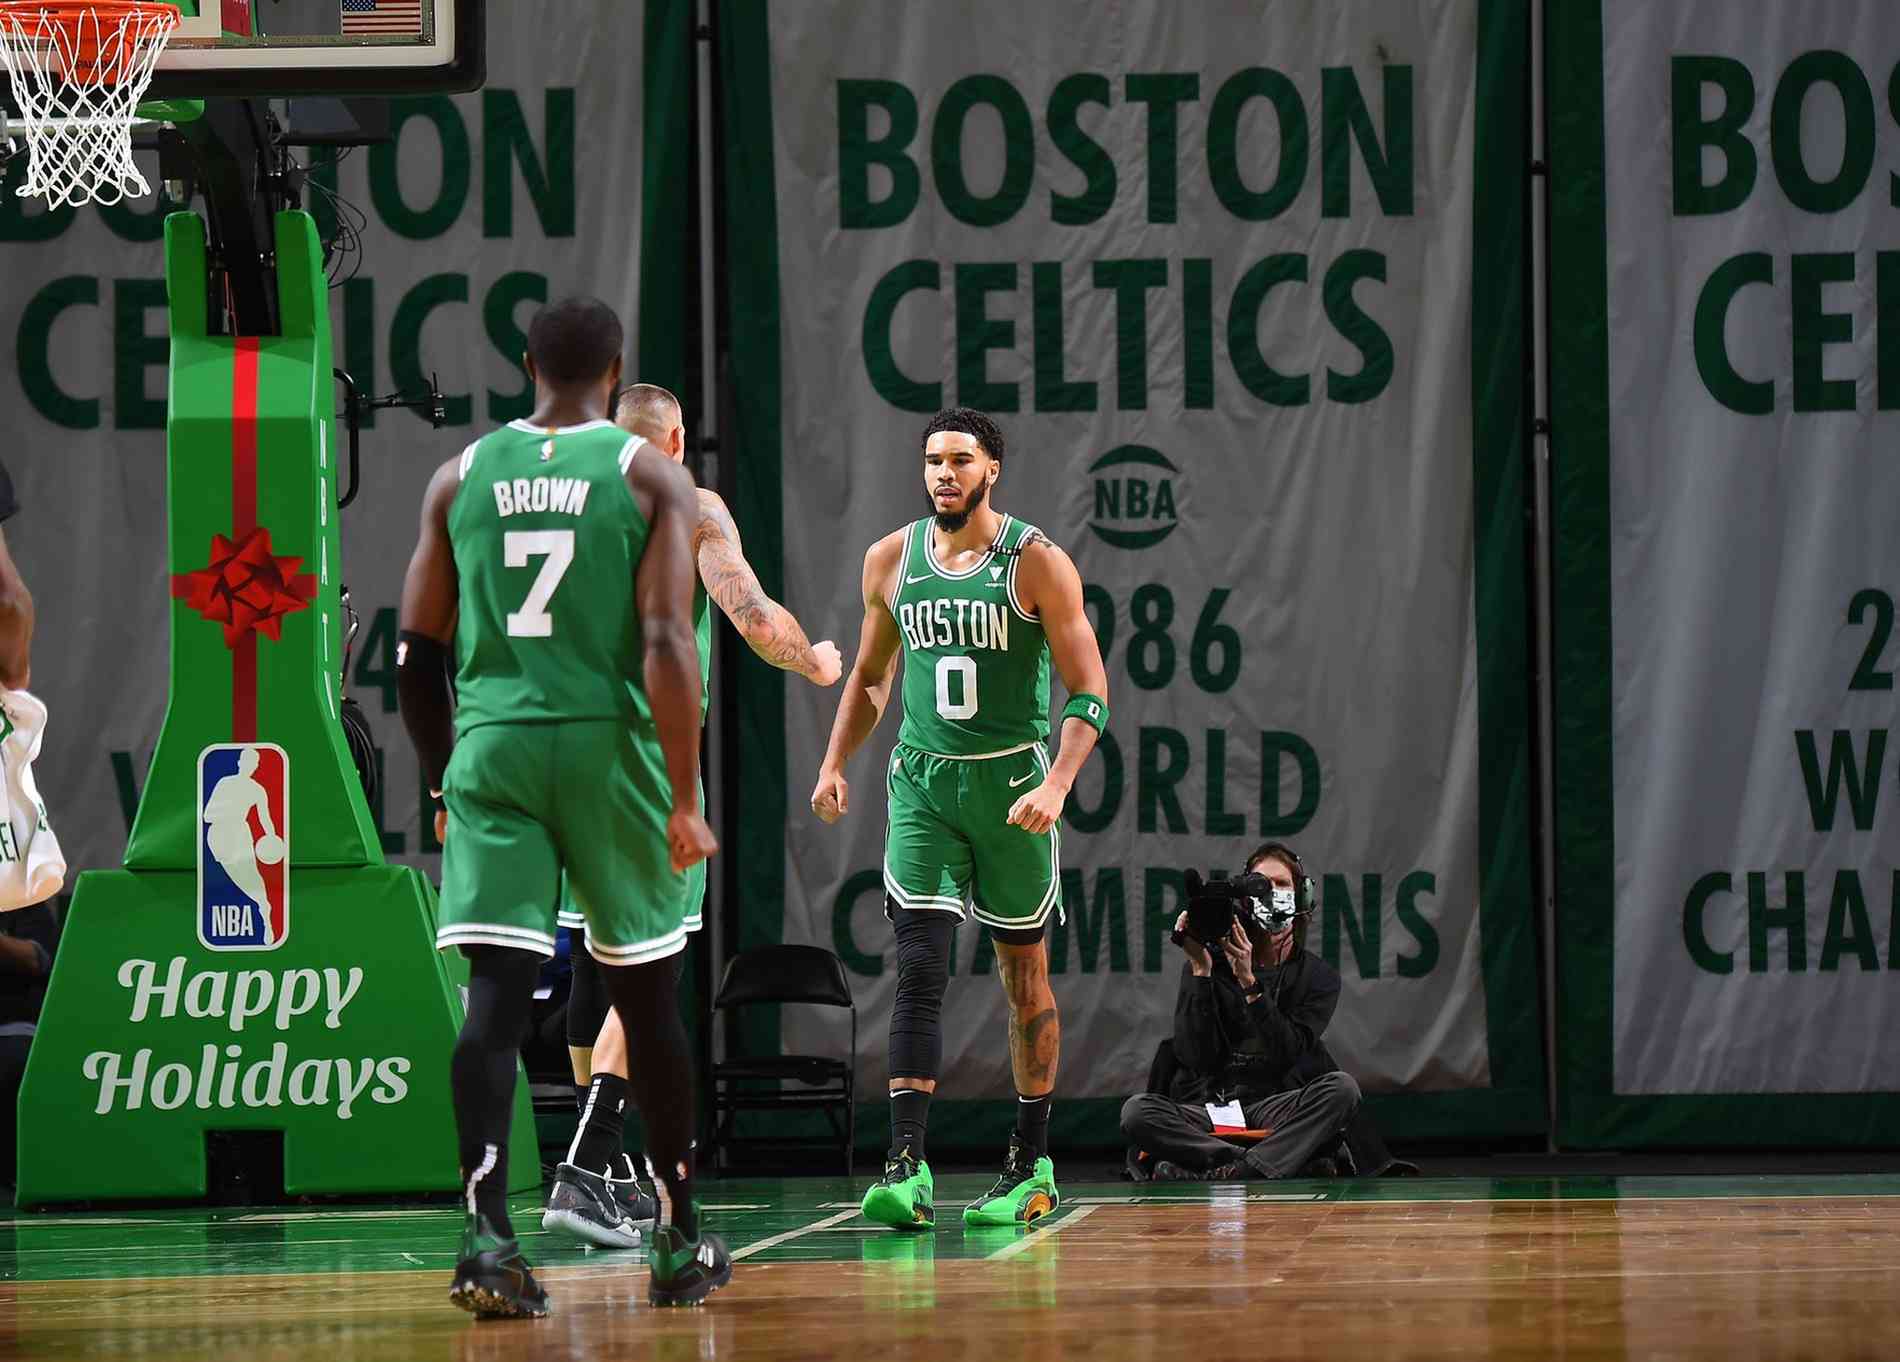 Celtics vence Bucs na NBA; Westbrook tem boa estreia, mas perde -  Superesportes